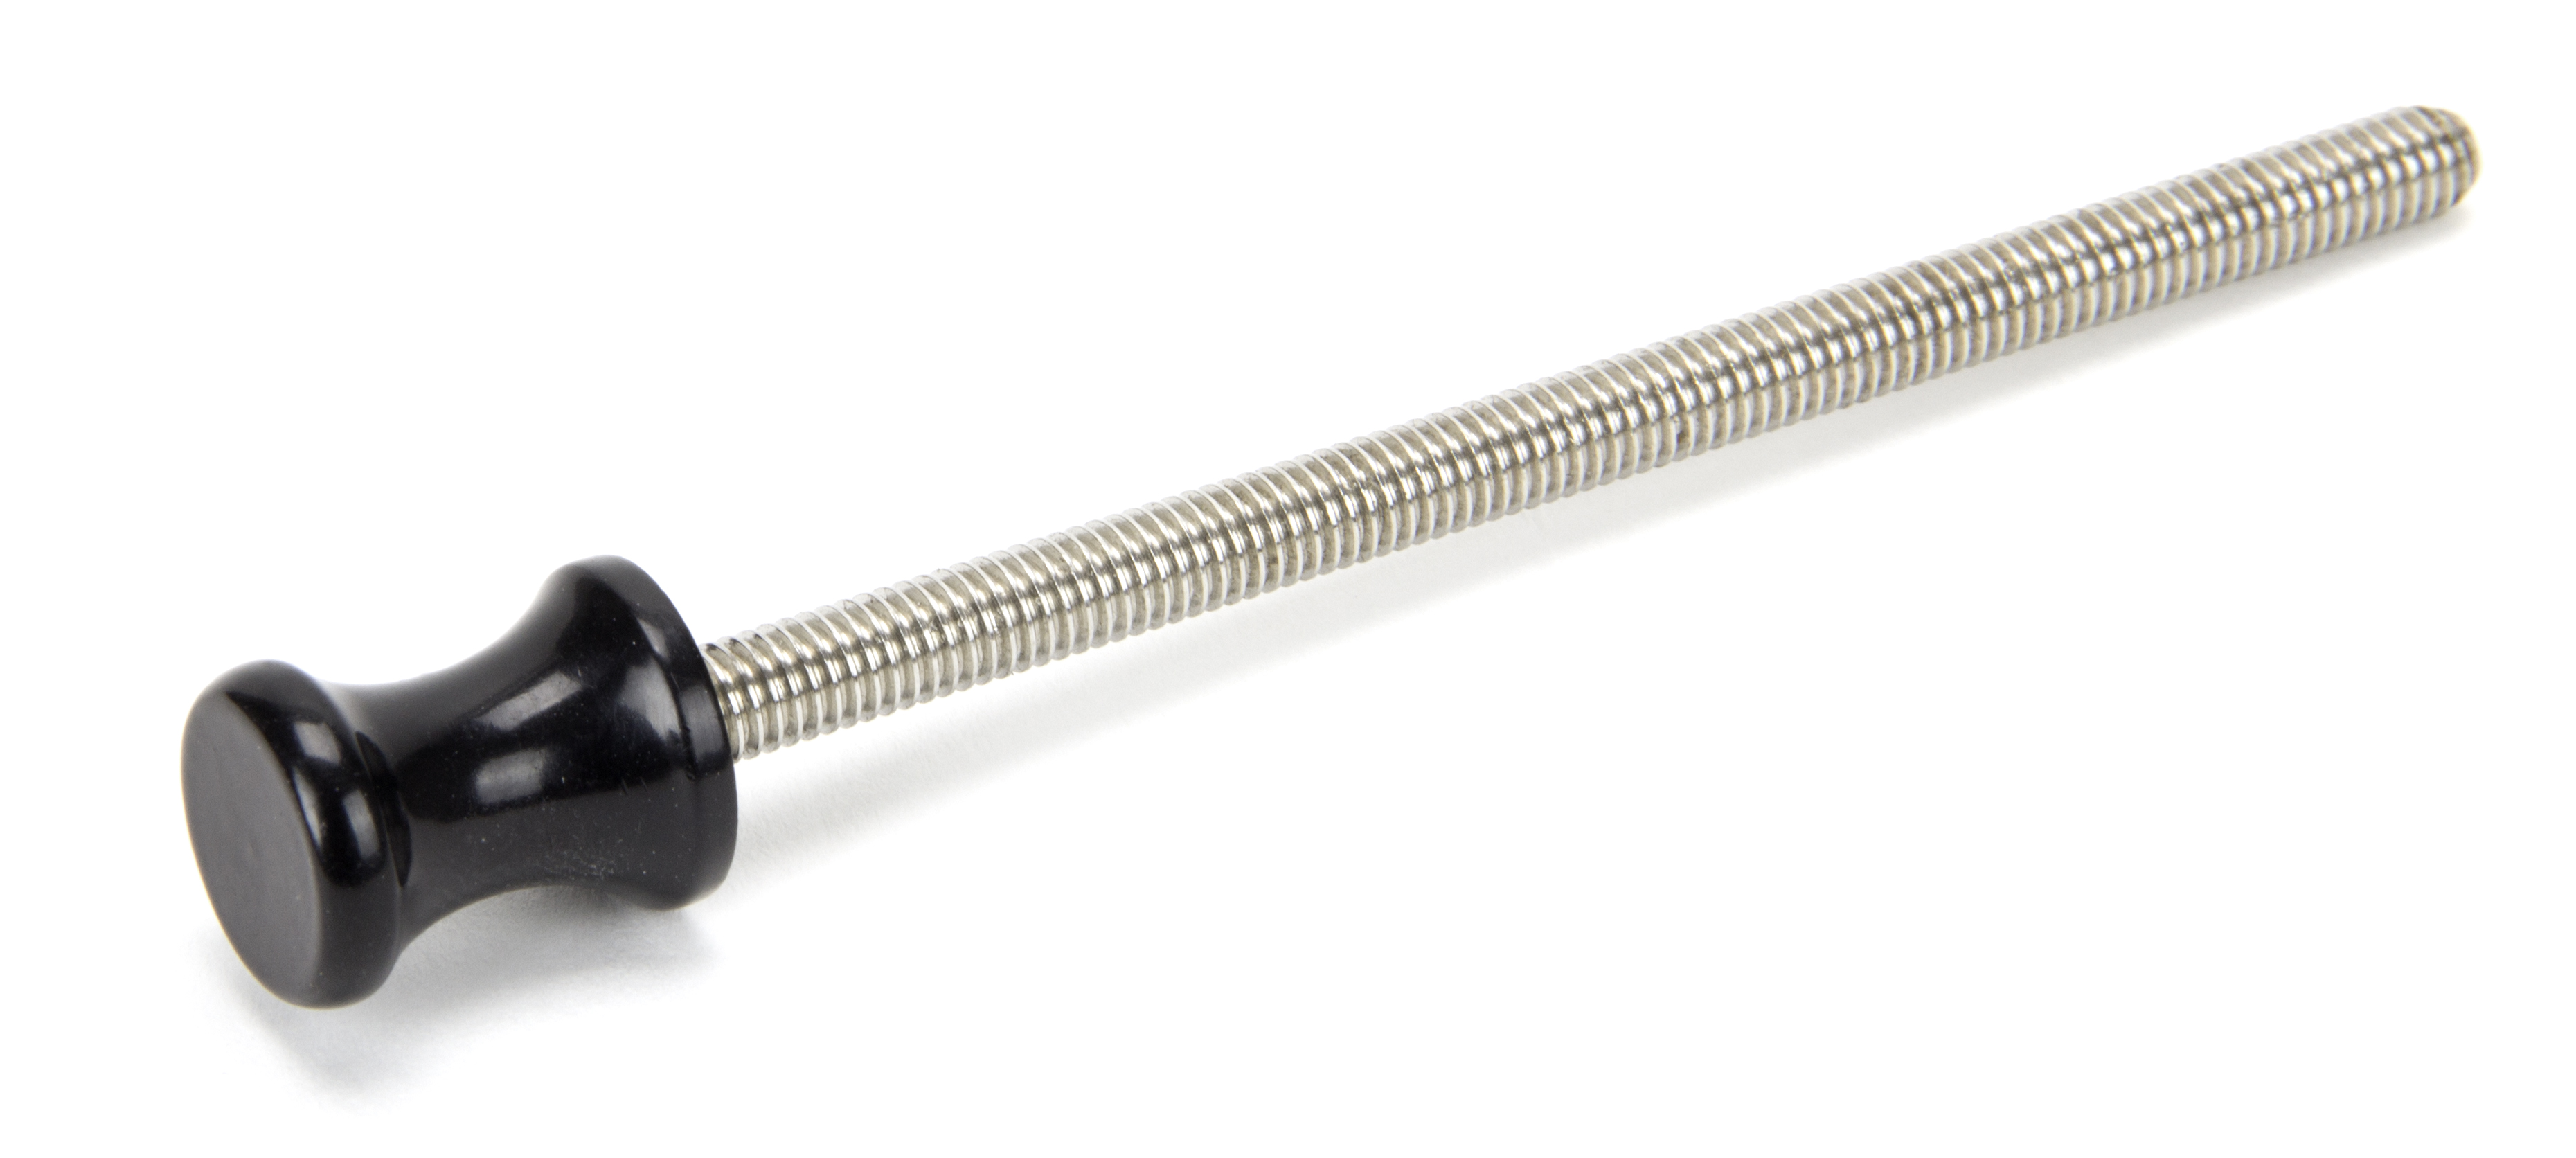 Stainless Steel M6 Threaded Bar - 110mm